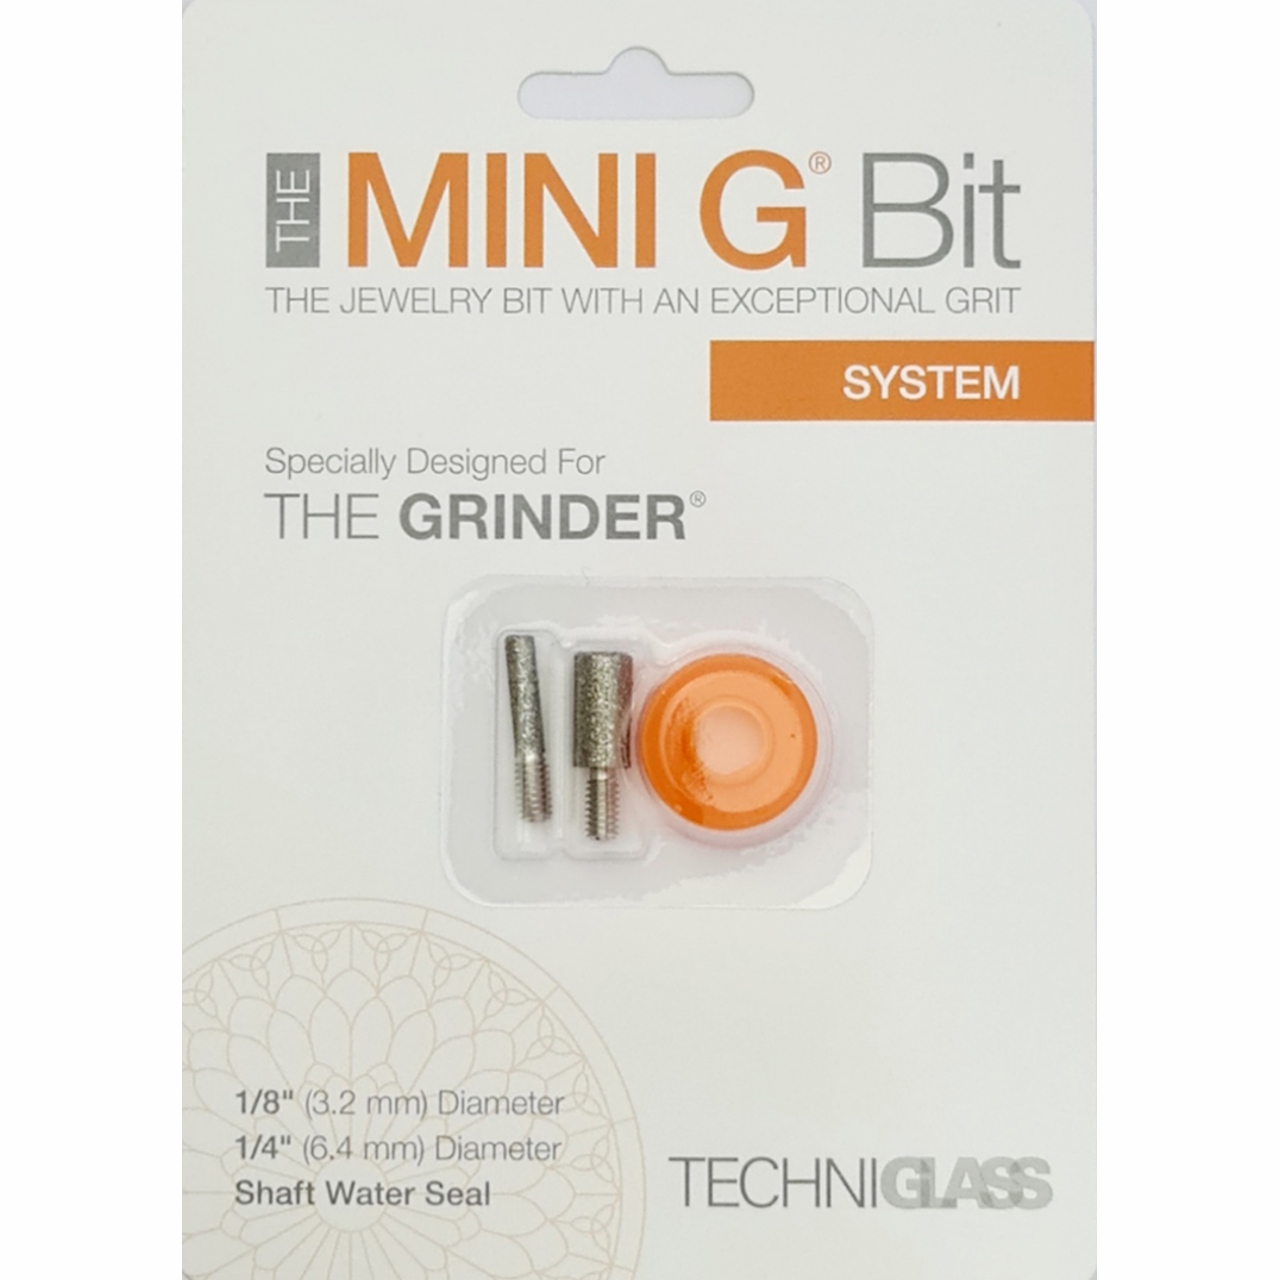 THE GRINDER 1 + 2 Mini G Bits set